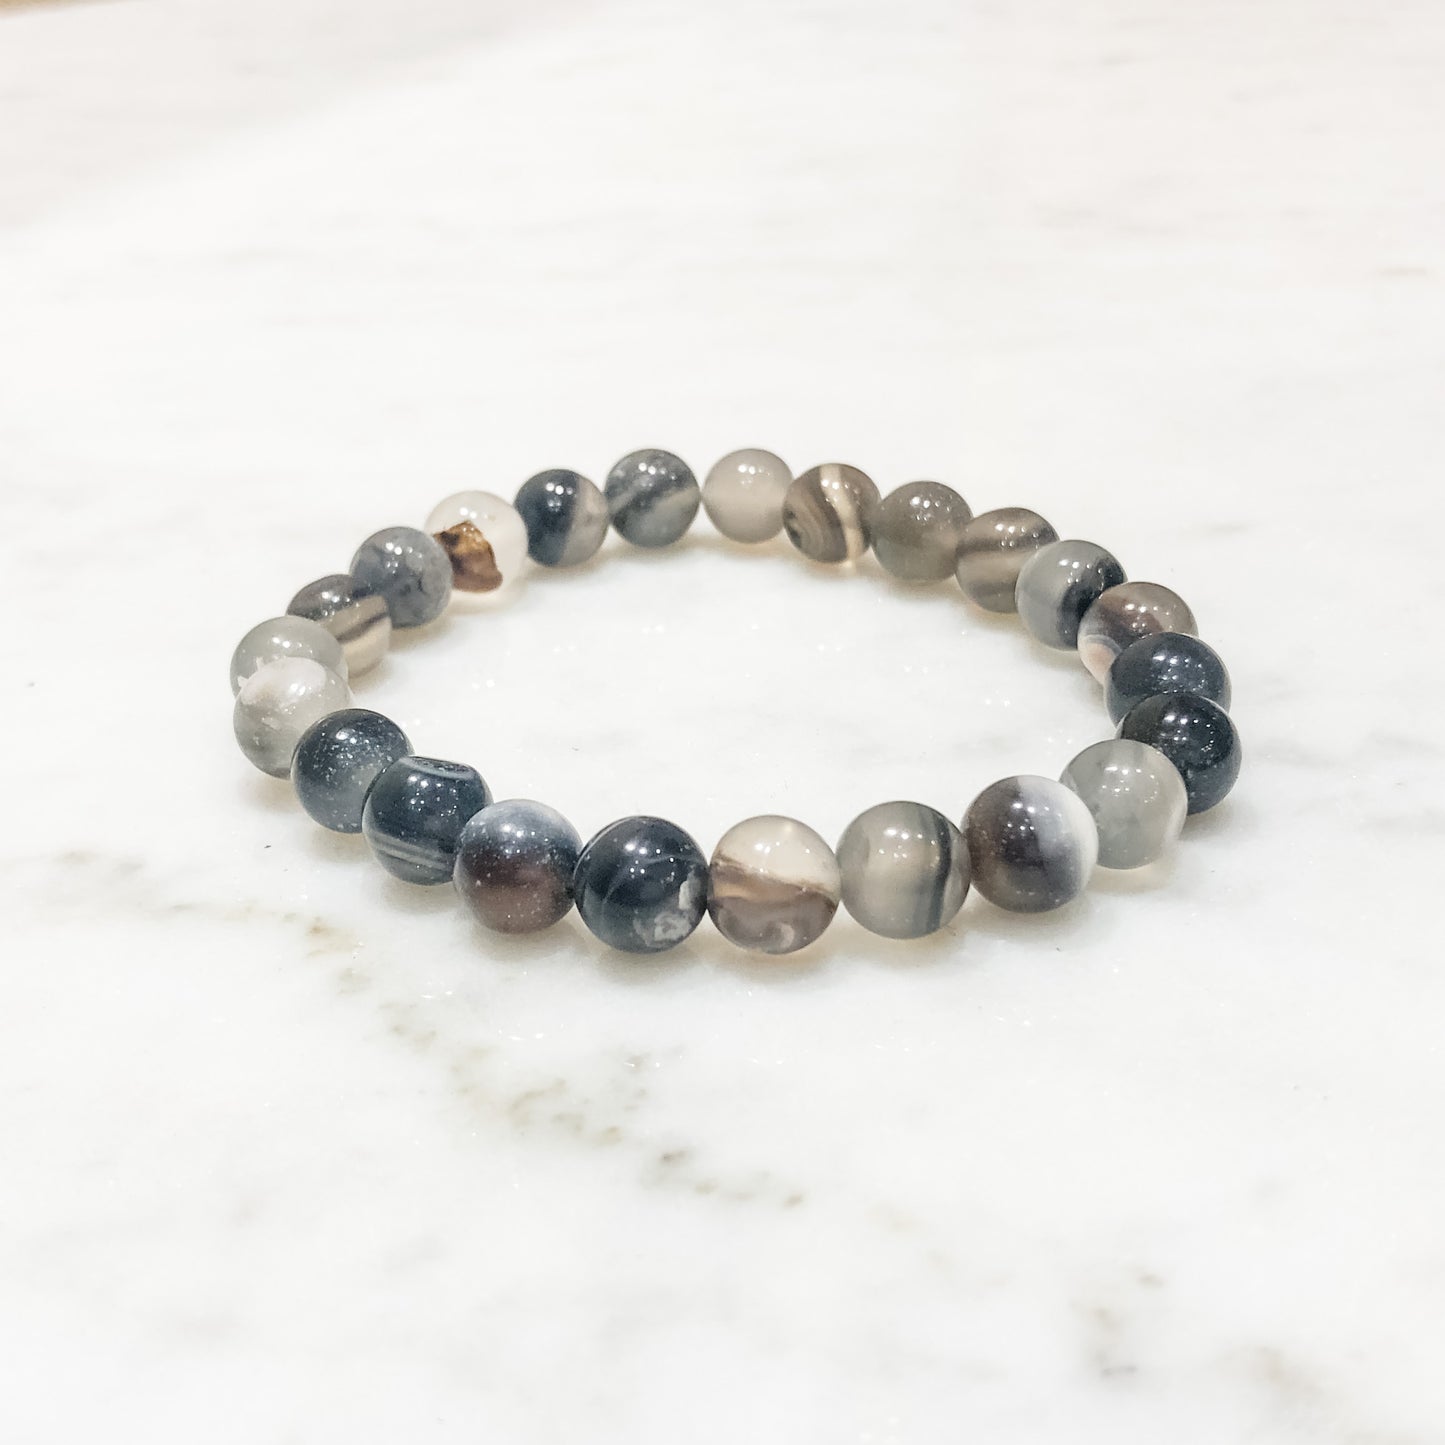 Crystal Beads Bracelet - Onyx Agate